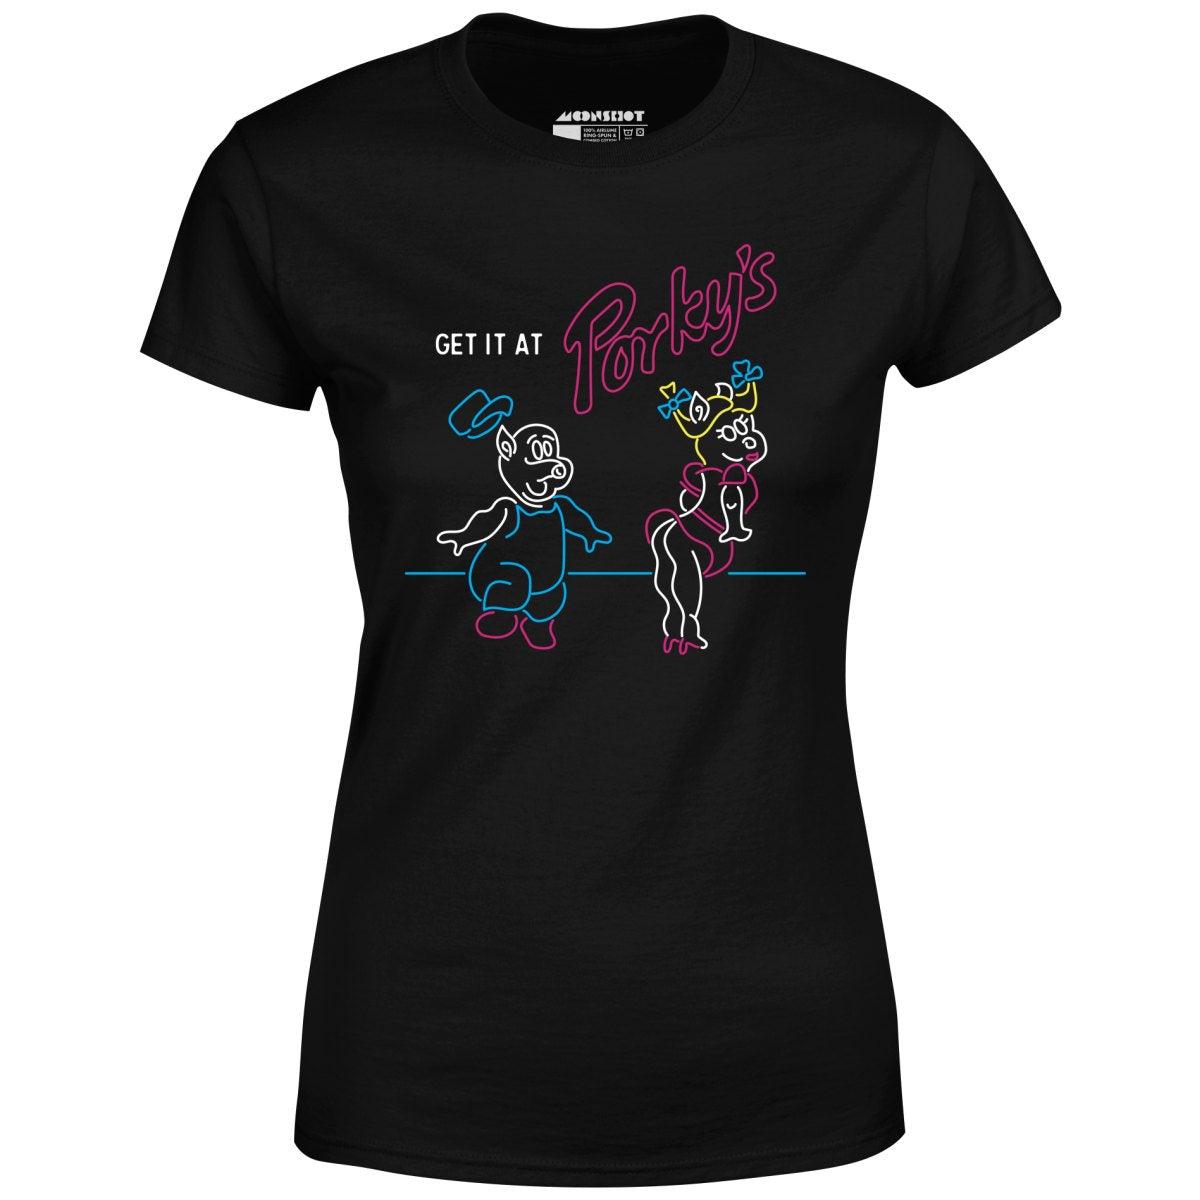 Get it At Porky's - Women's T-Shirt